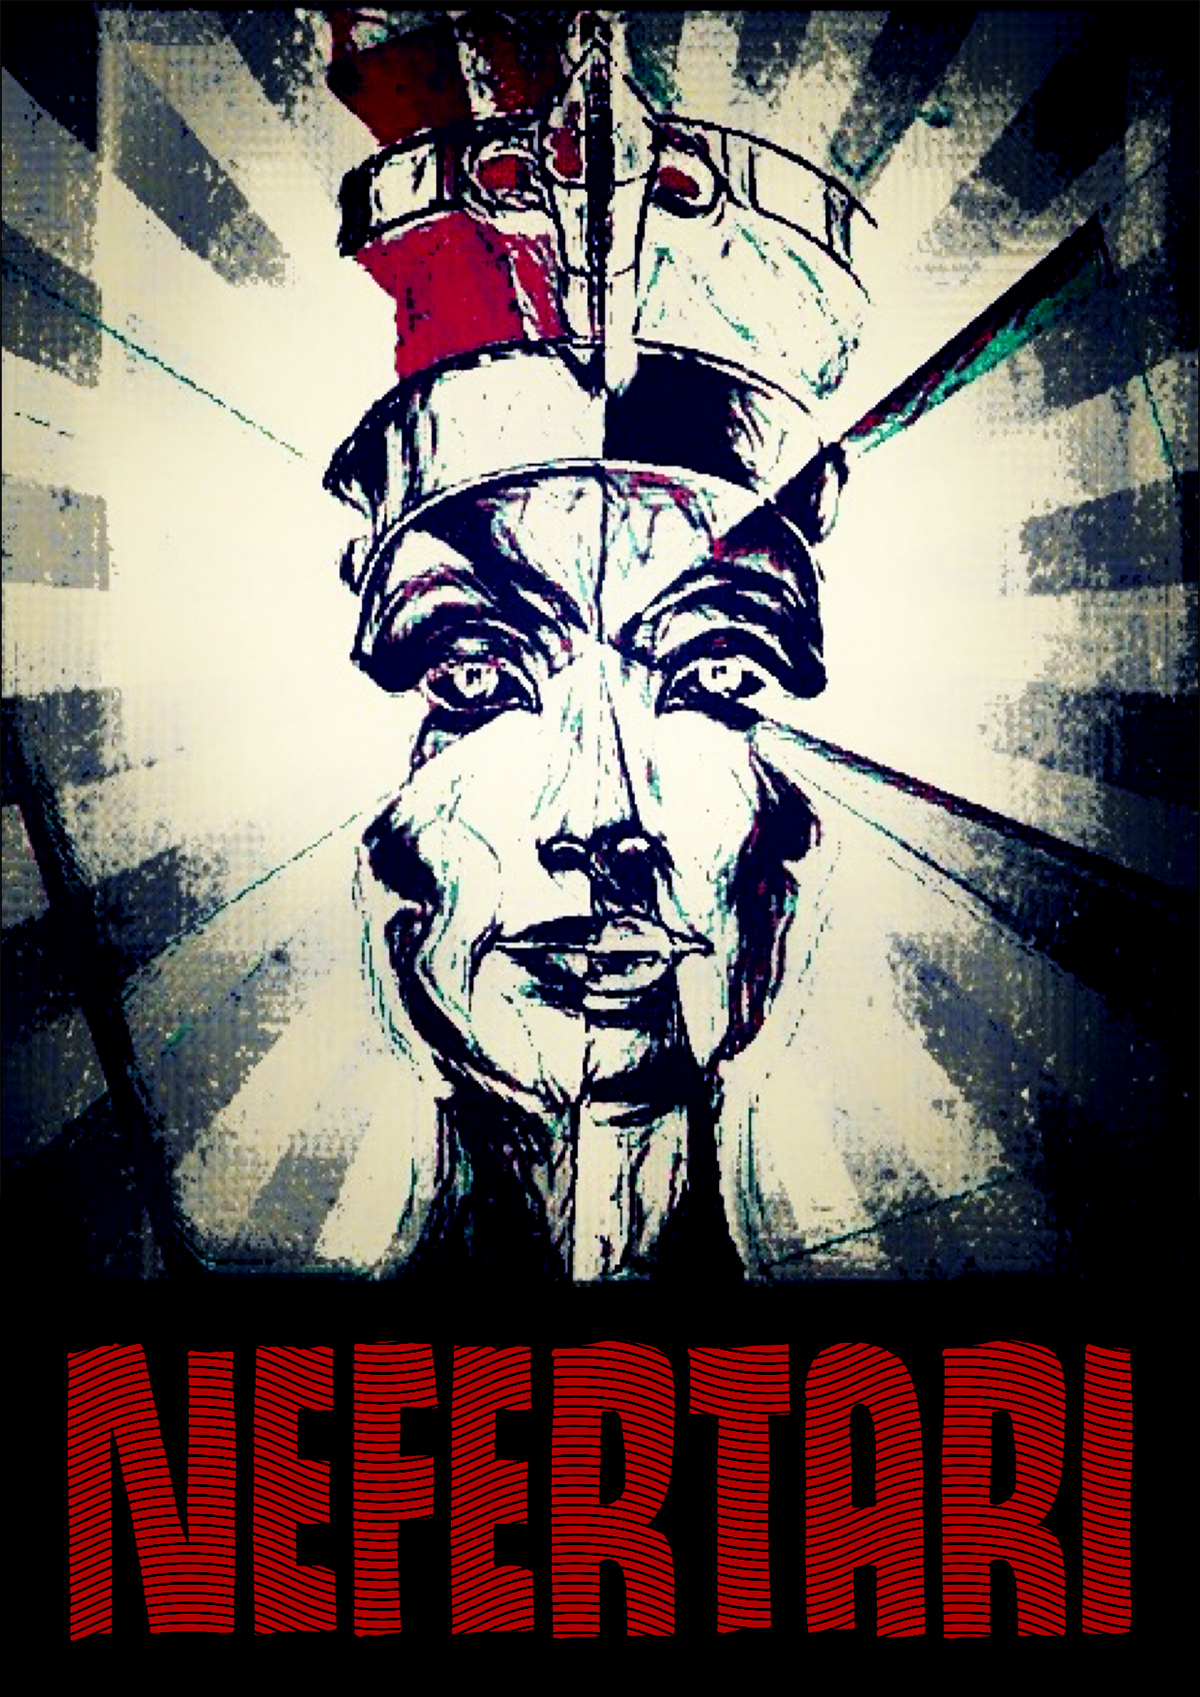 Nefertiti poster design